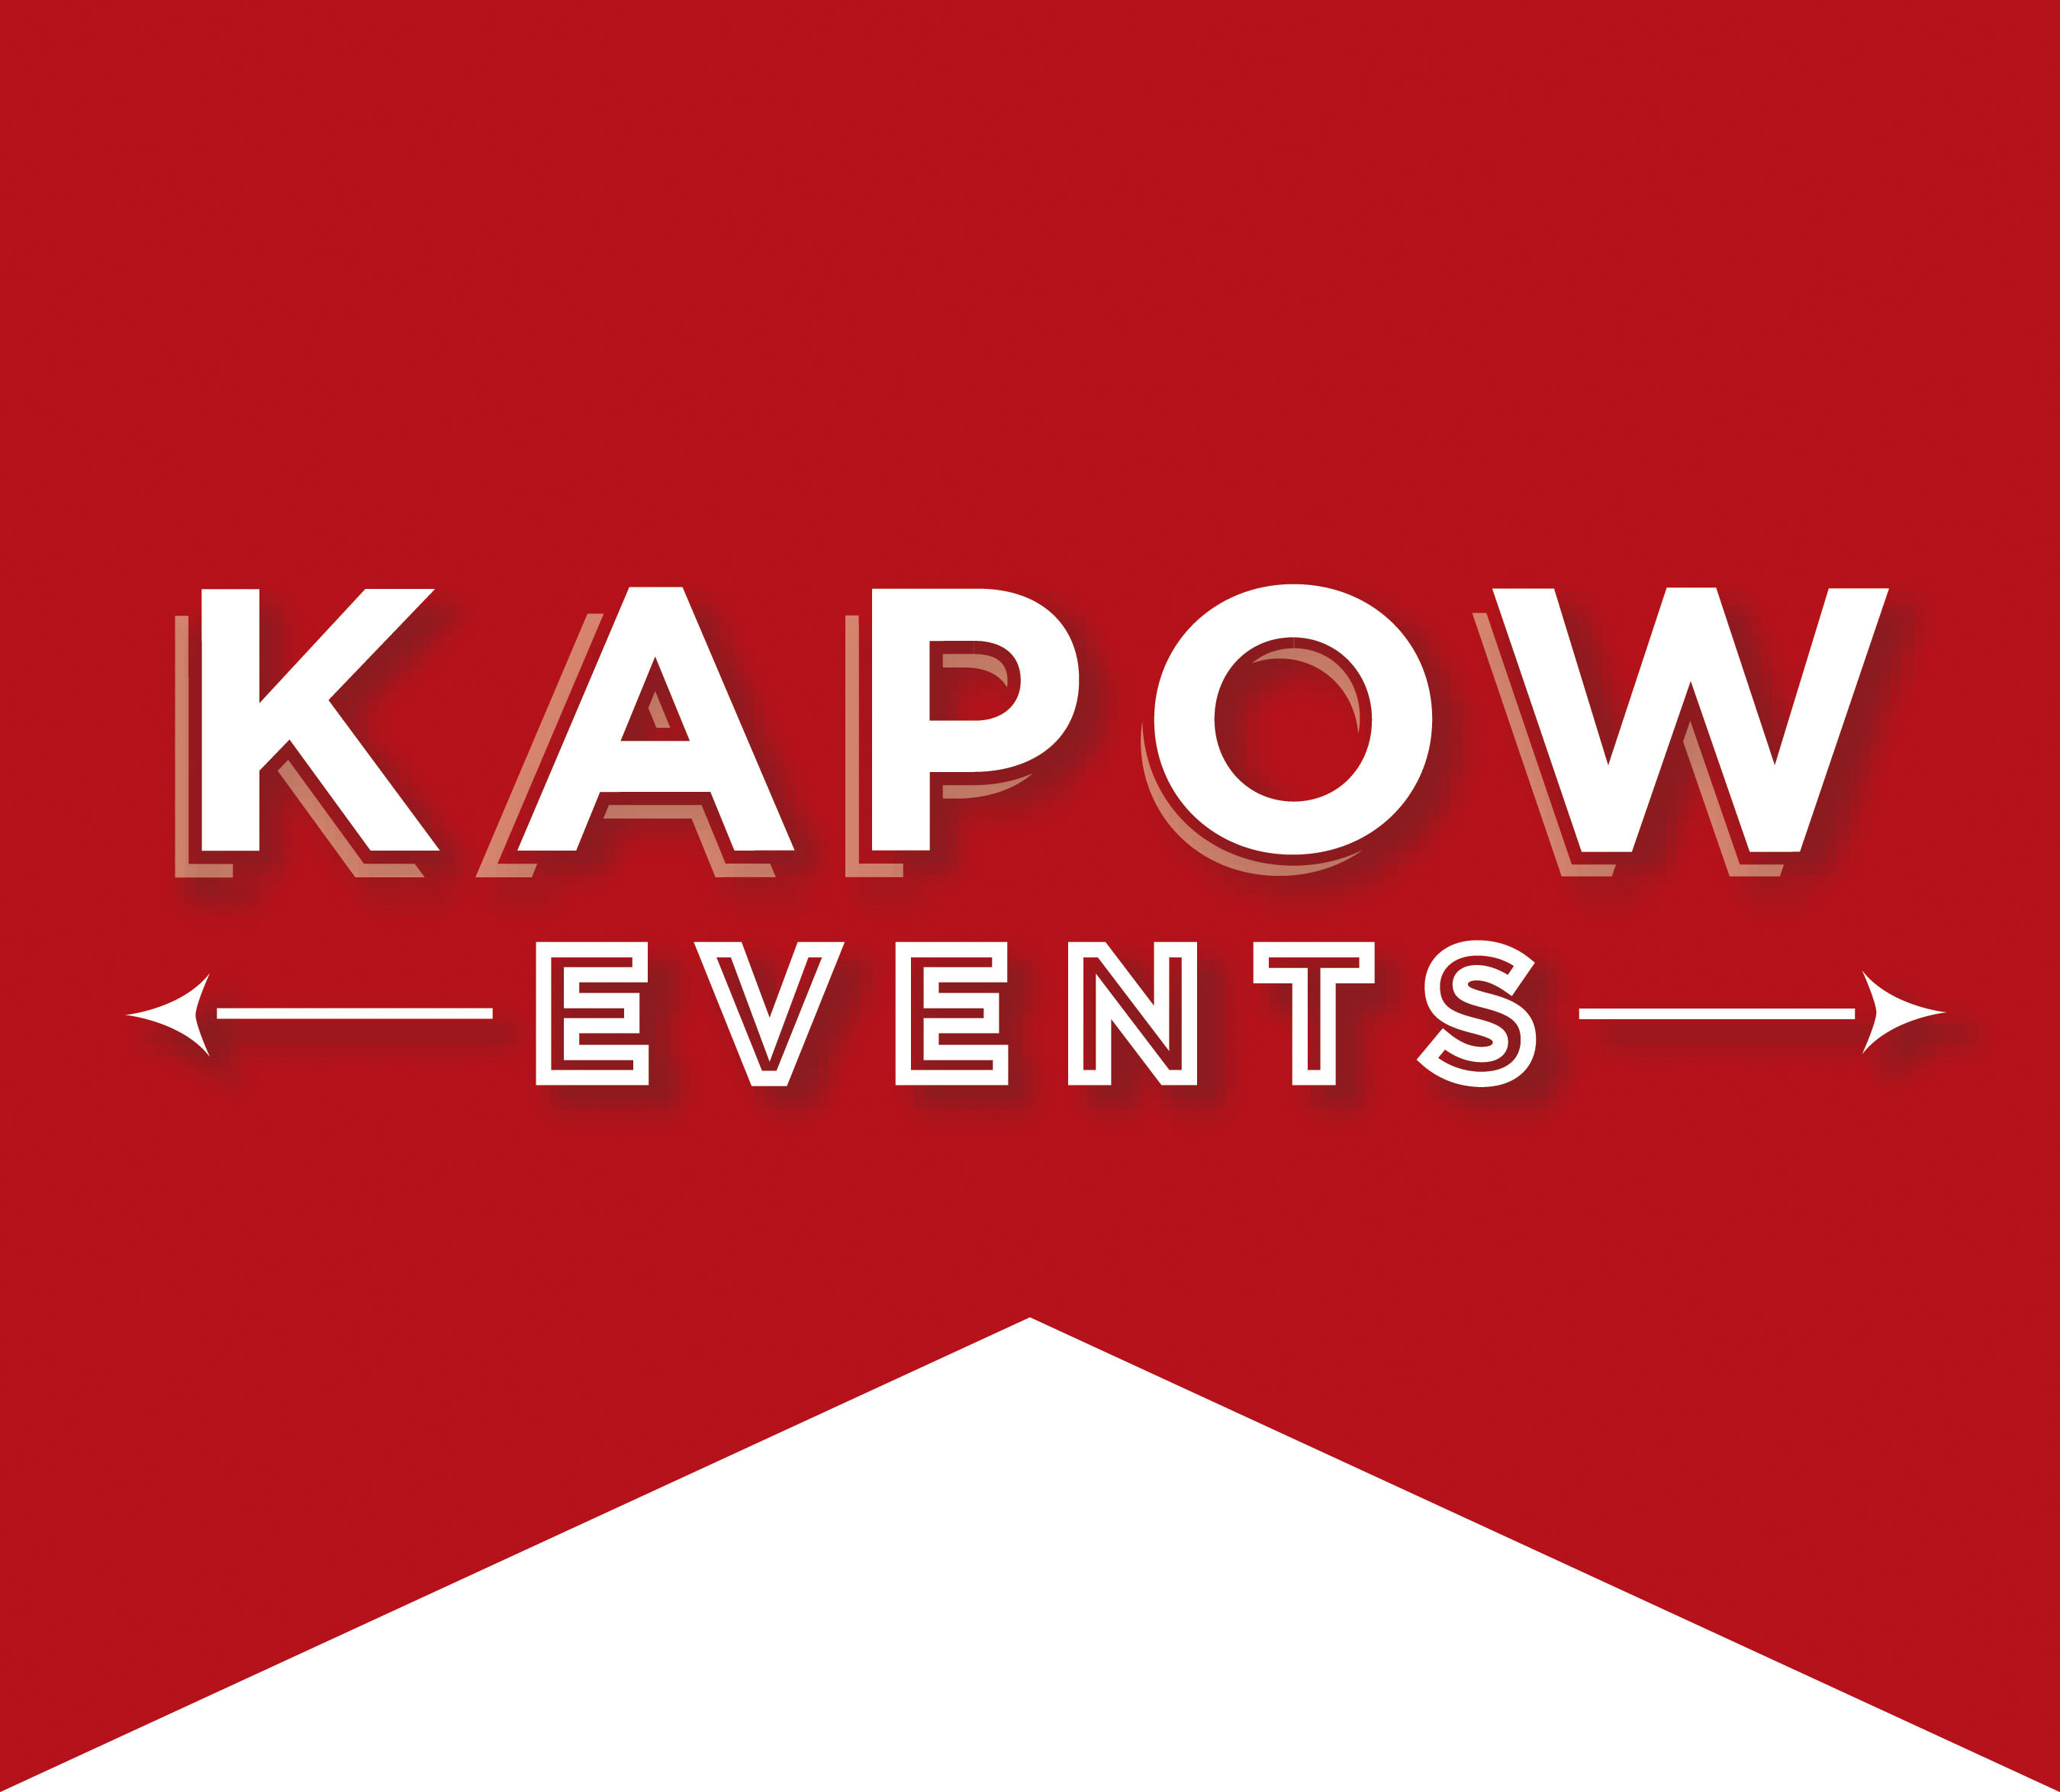 Kapow Events, Inc. (PRNewsFoto/Kapow Events) (PRNewsFoto/)